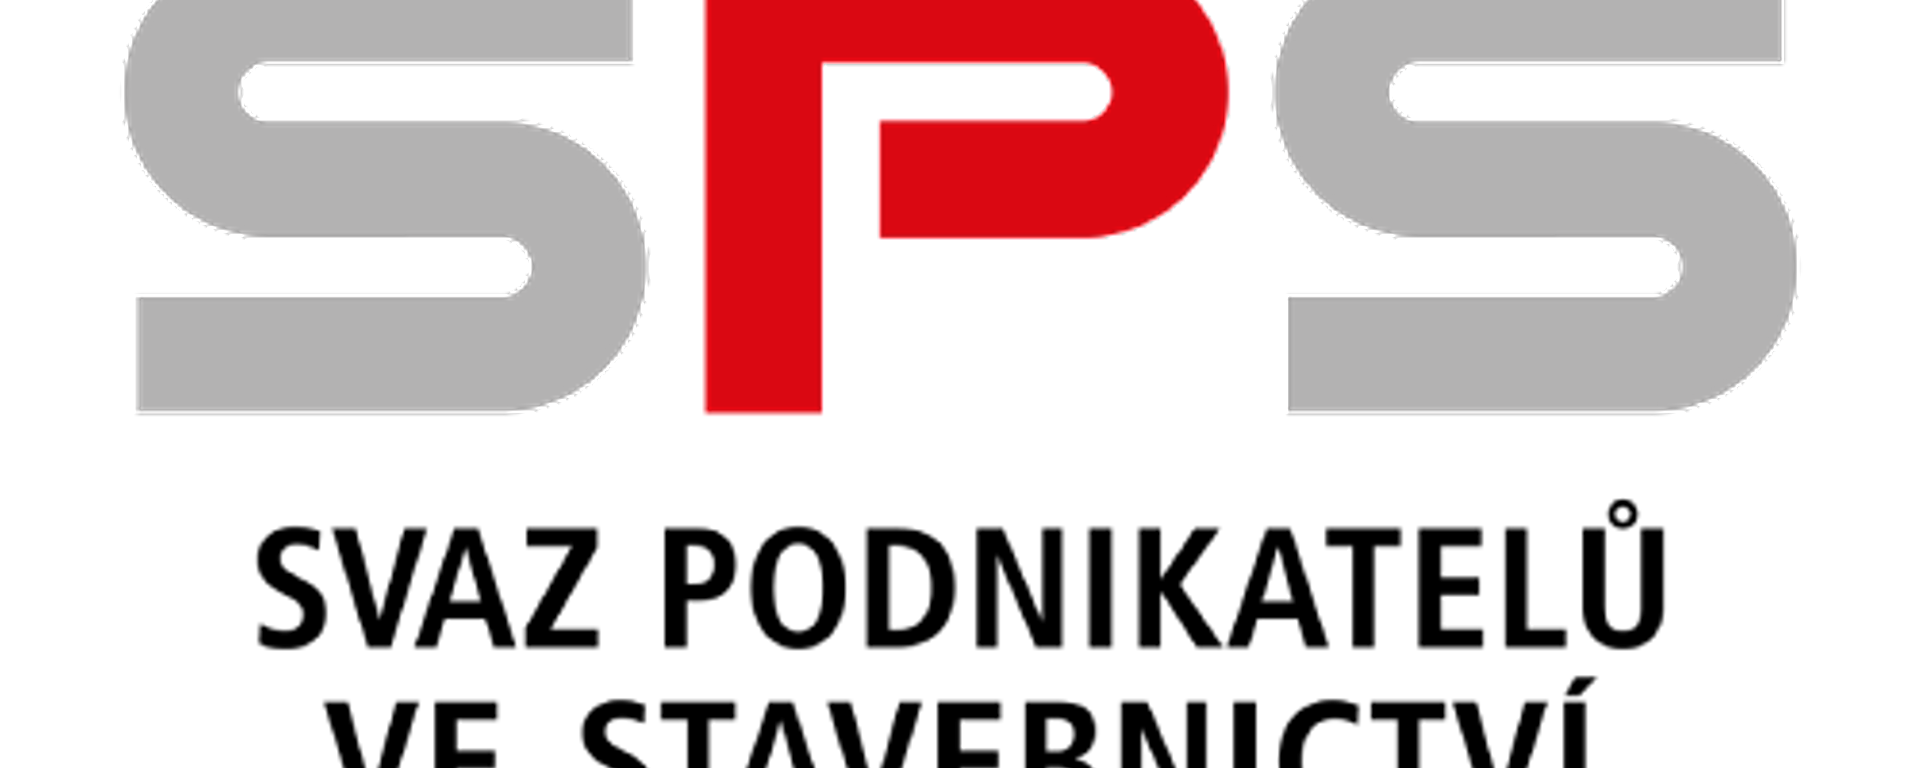 SPS logo 2020_ctverec.png